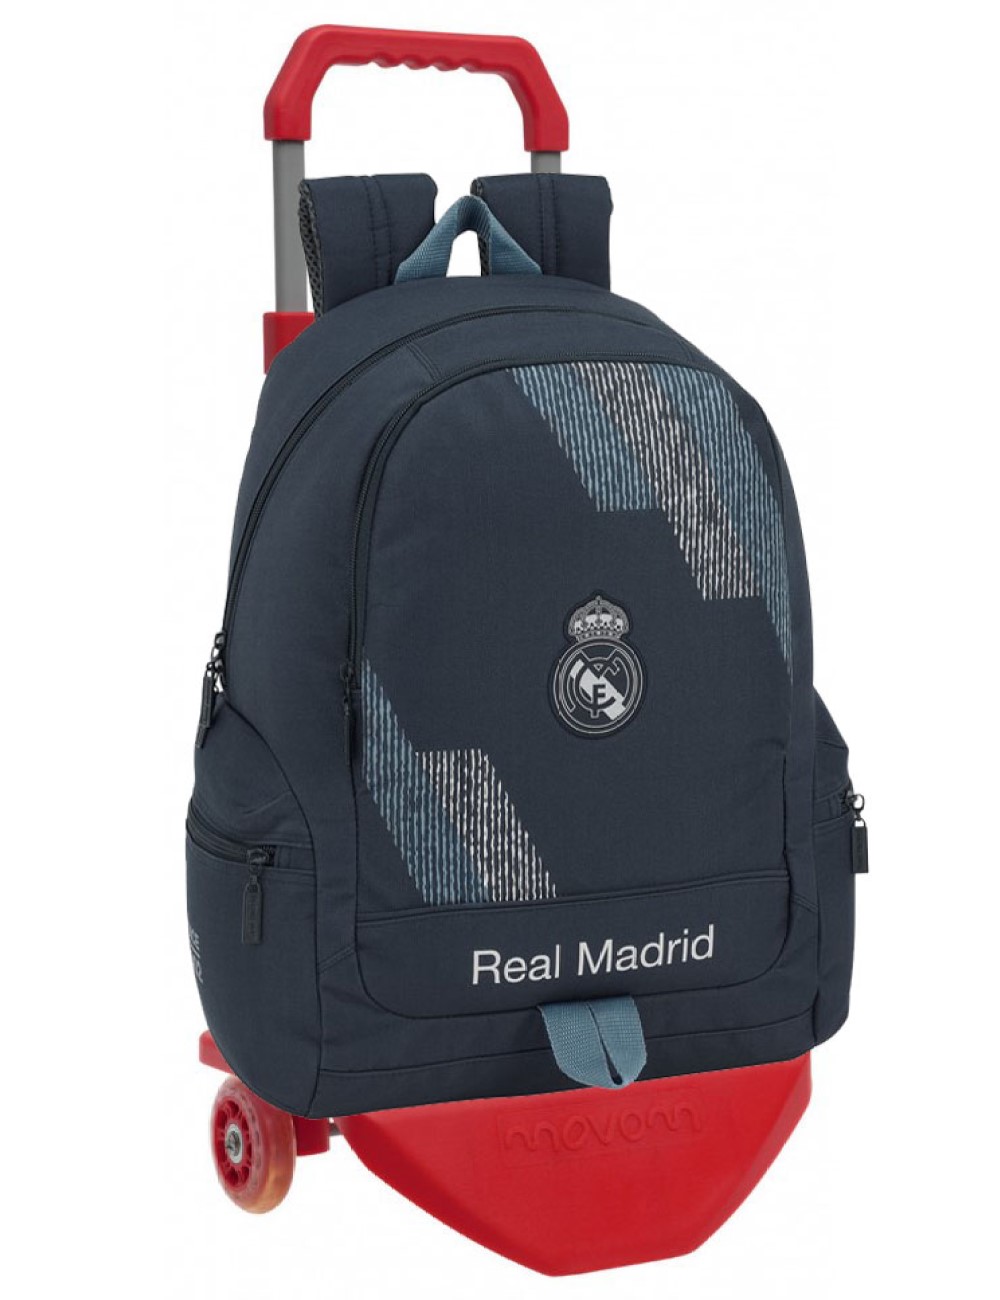 611834662CR Mochila Real Madrid, Dark Grey, con Carro Rojo Premium